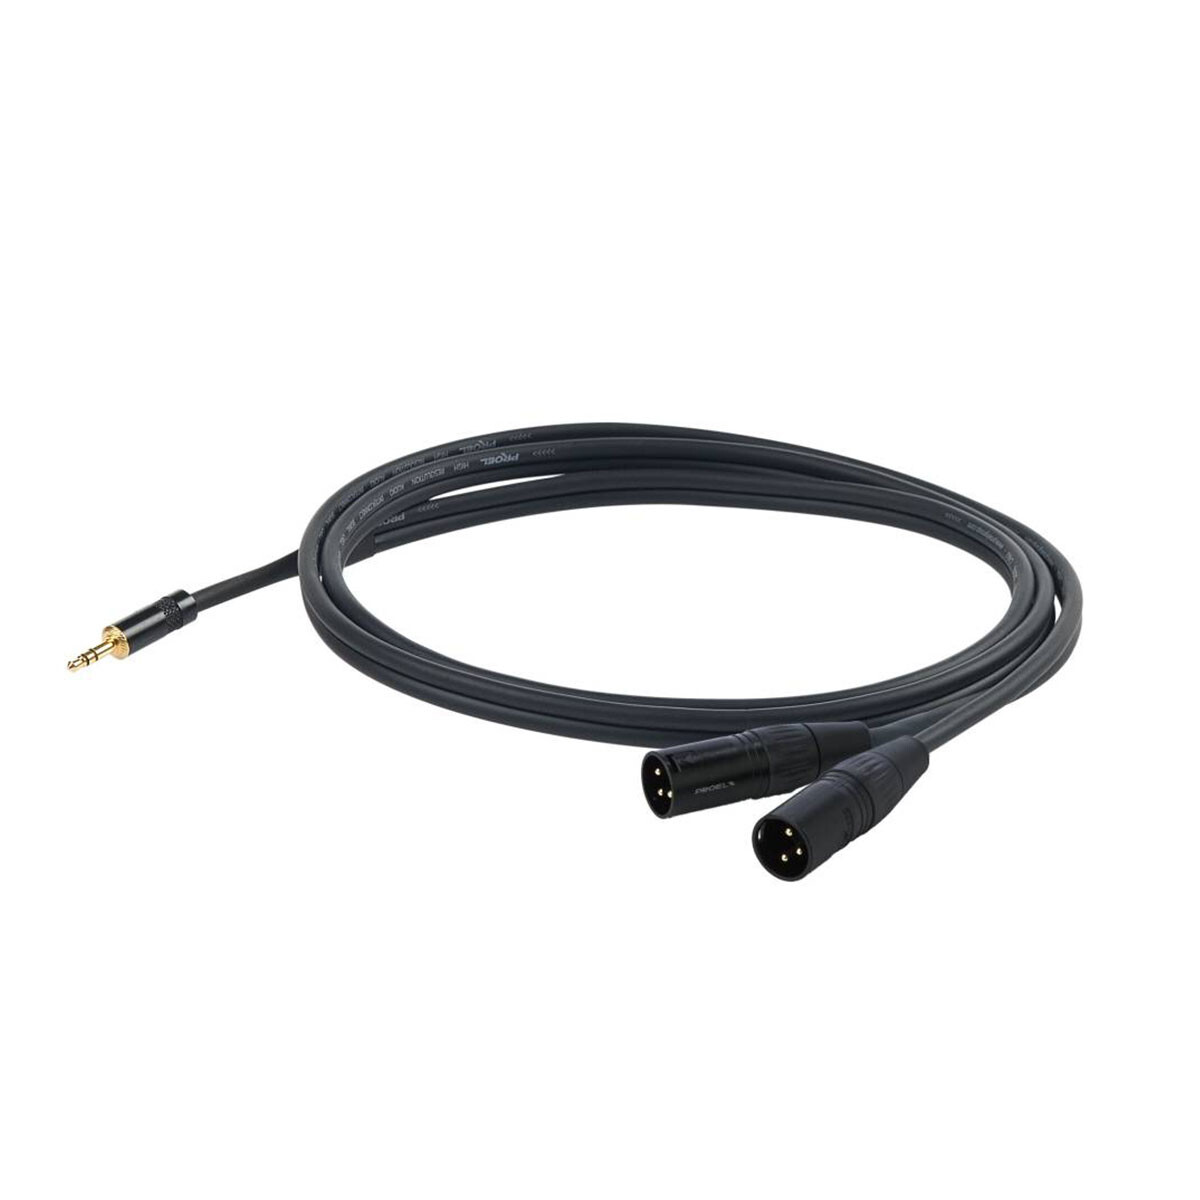 Cable Adaptador Preol Chlp320lu3 3.5 A 2 Xlr M 3mts 